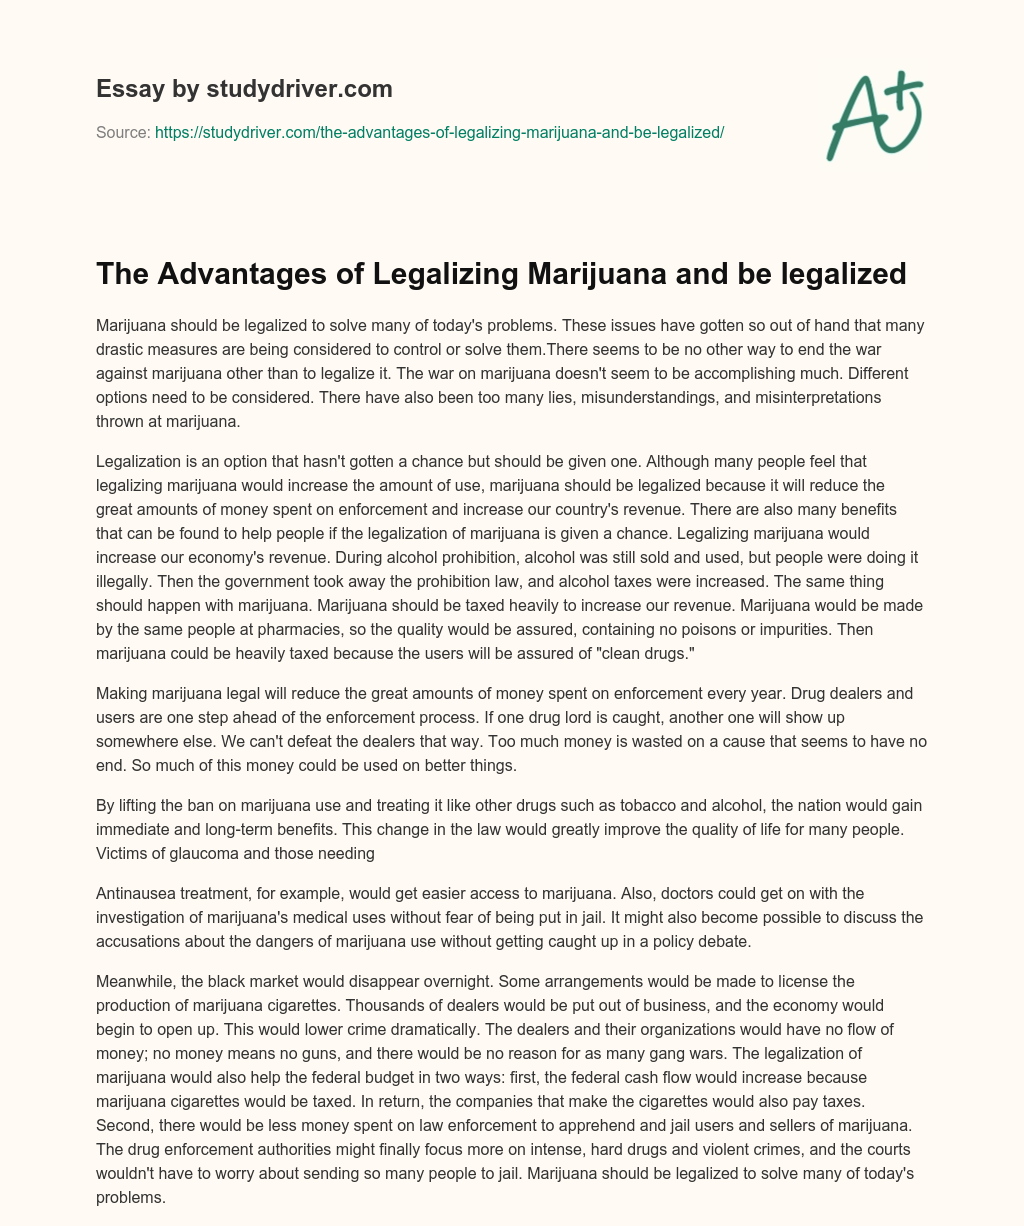 The Advantages of Legalizing Marijuana and be Legalized essay